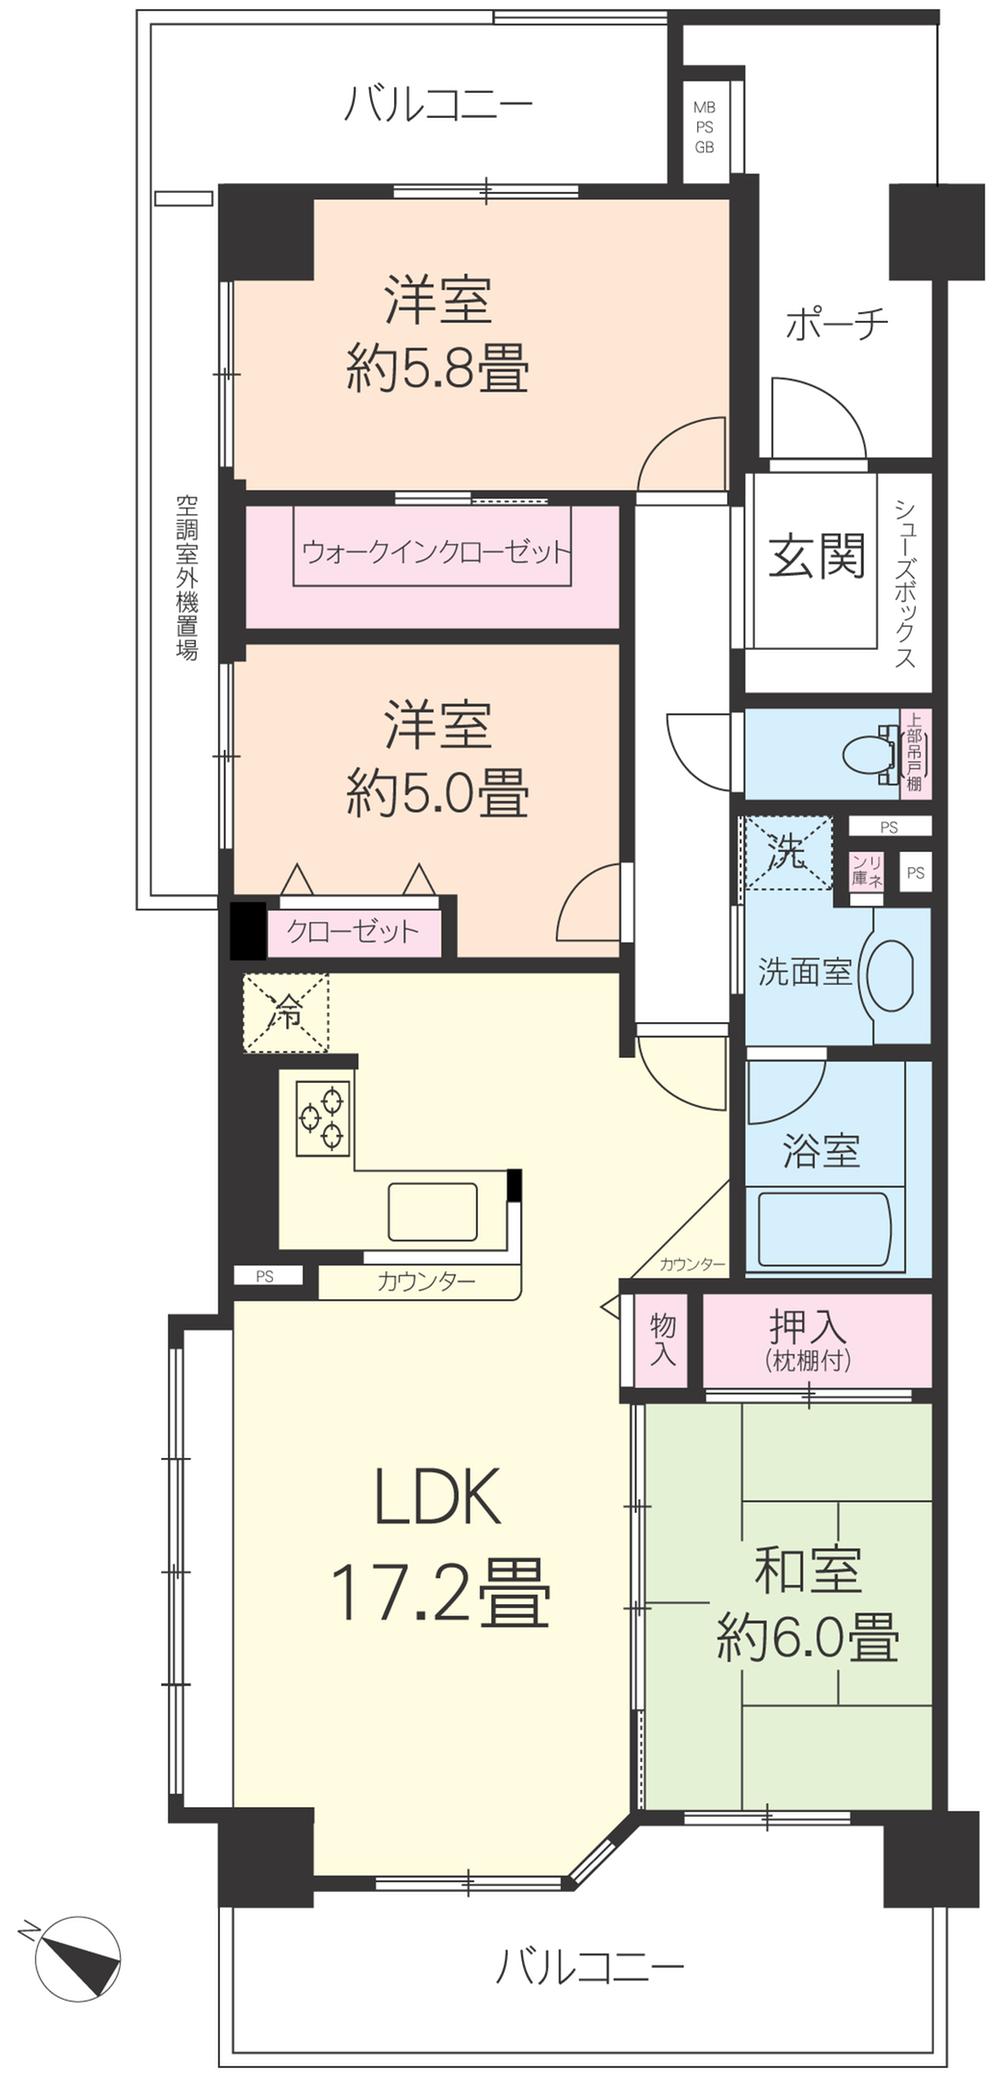 Floor plan. 3LDK, Price 22 million yen, Occupied area 81.39 sq m , Balcony area 10.7 sq m